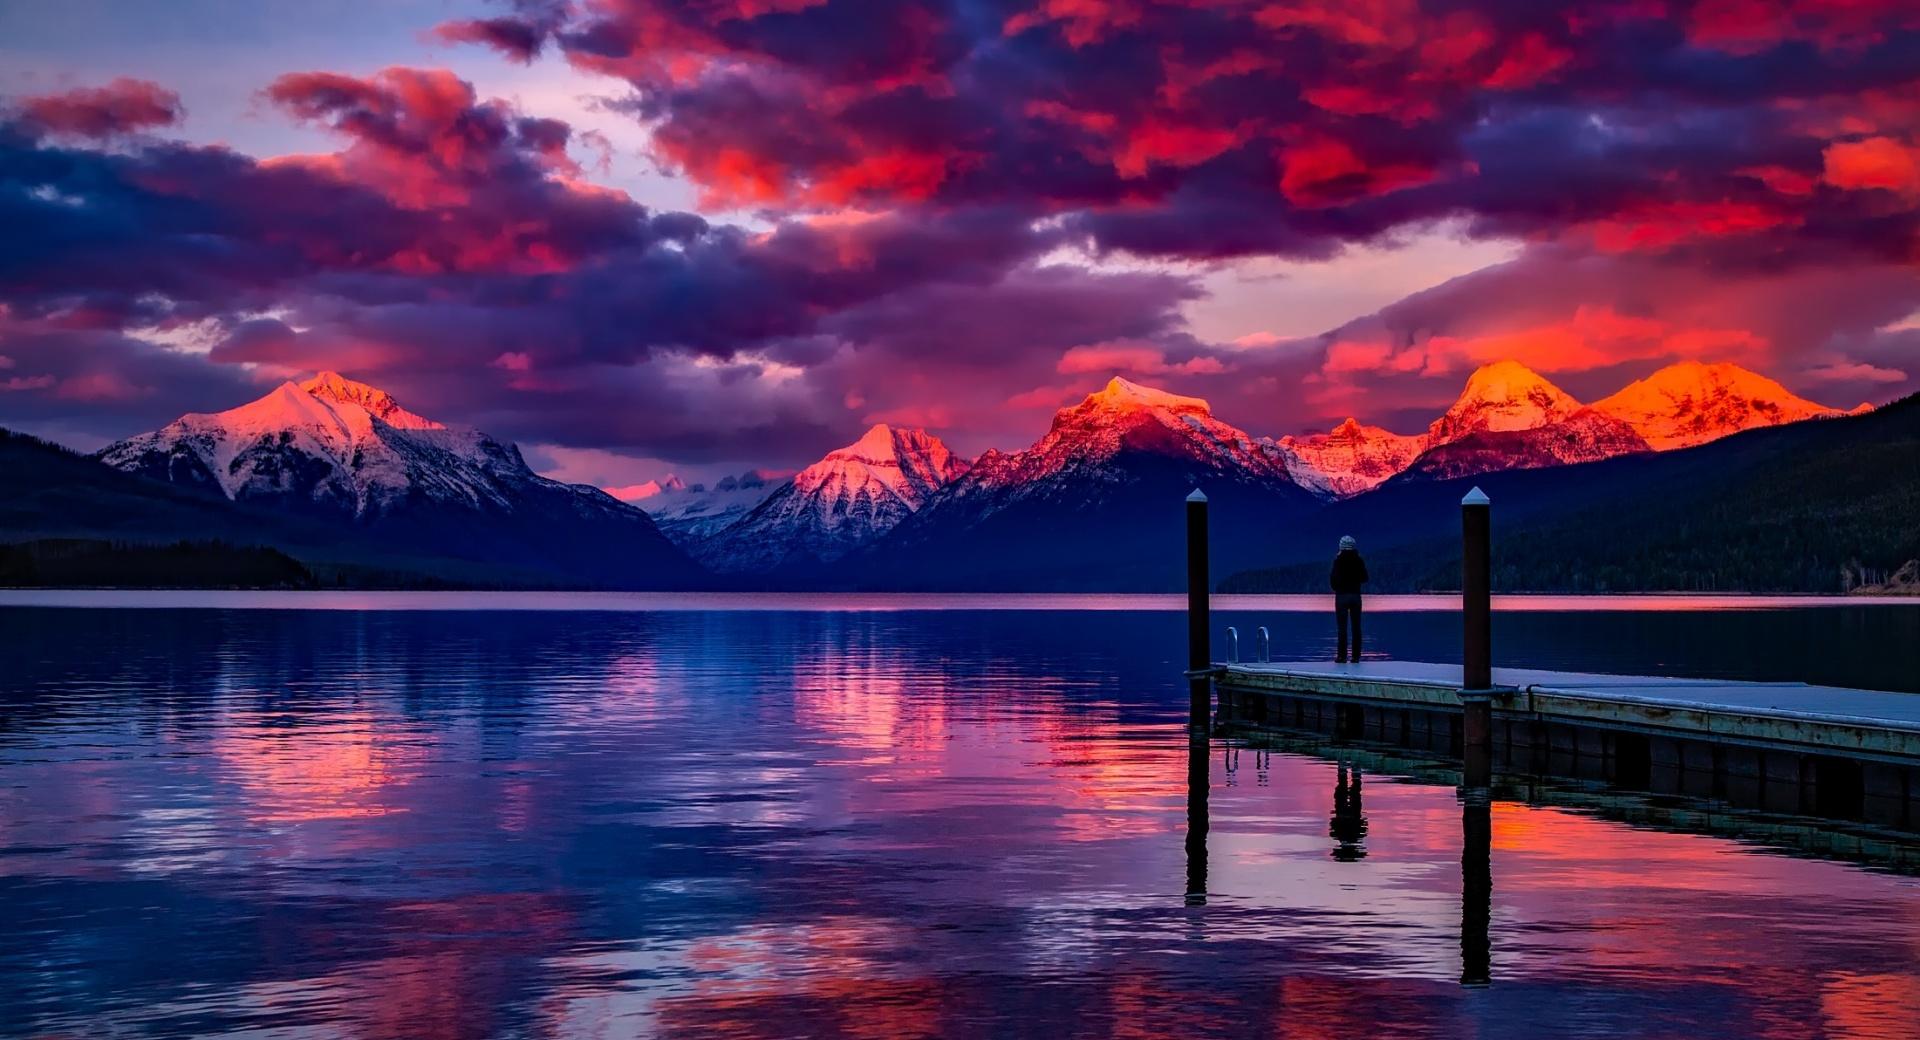 Lake McDonald, Montana at 1280 x 960 size wallpapers HD quality